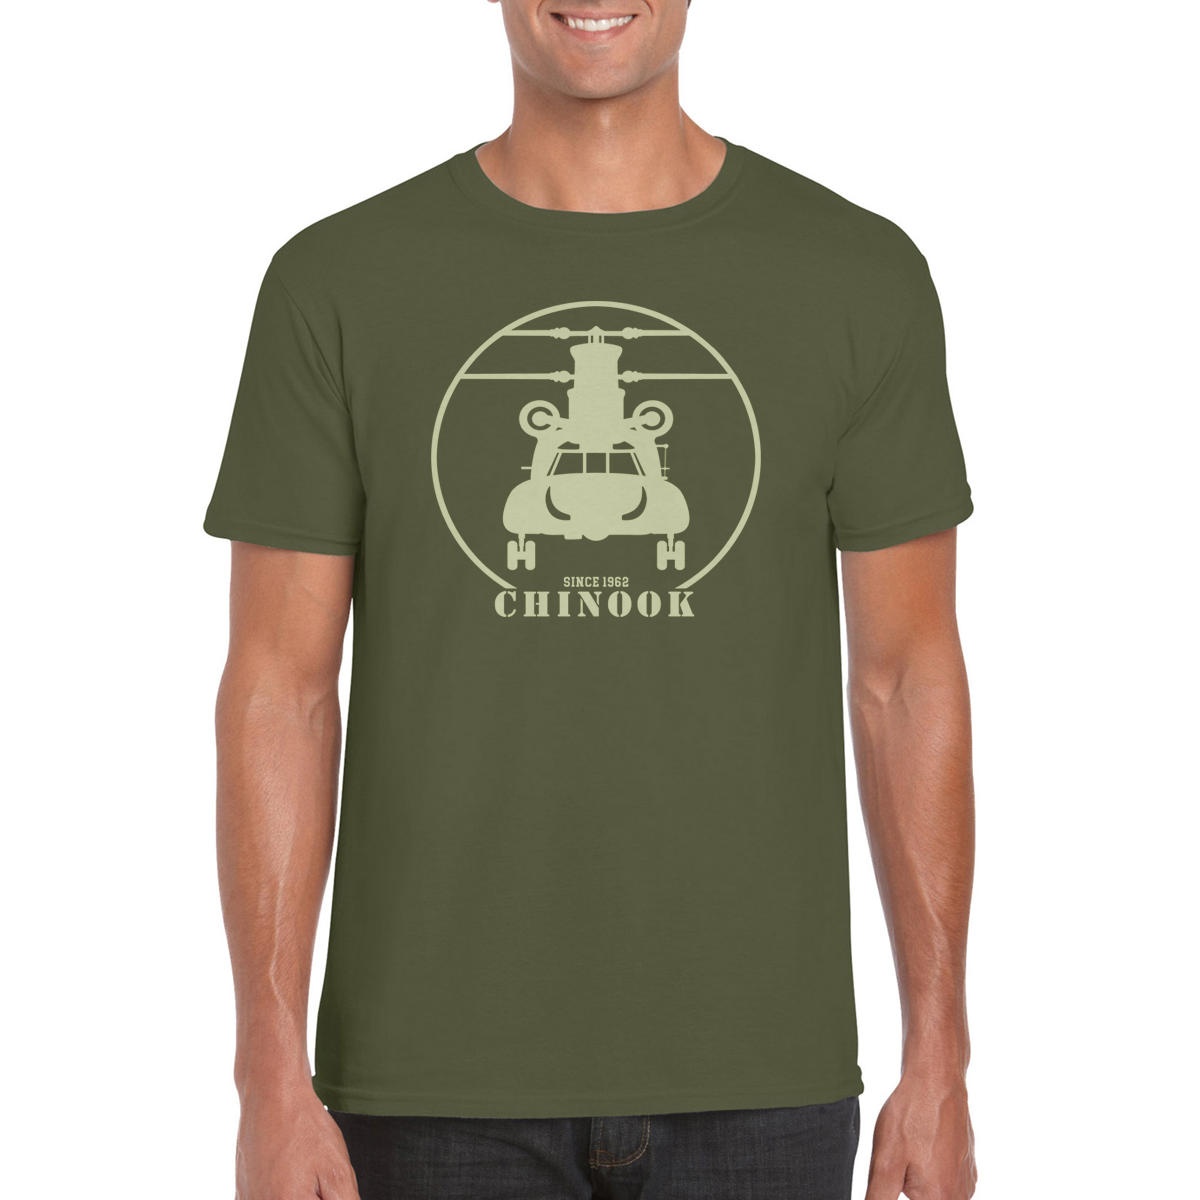 SINCE 1962 CHINOOK T-Shirt